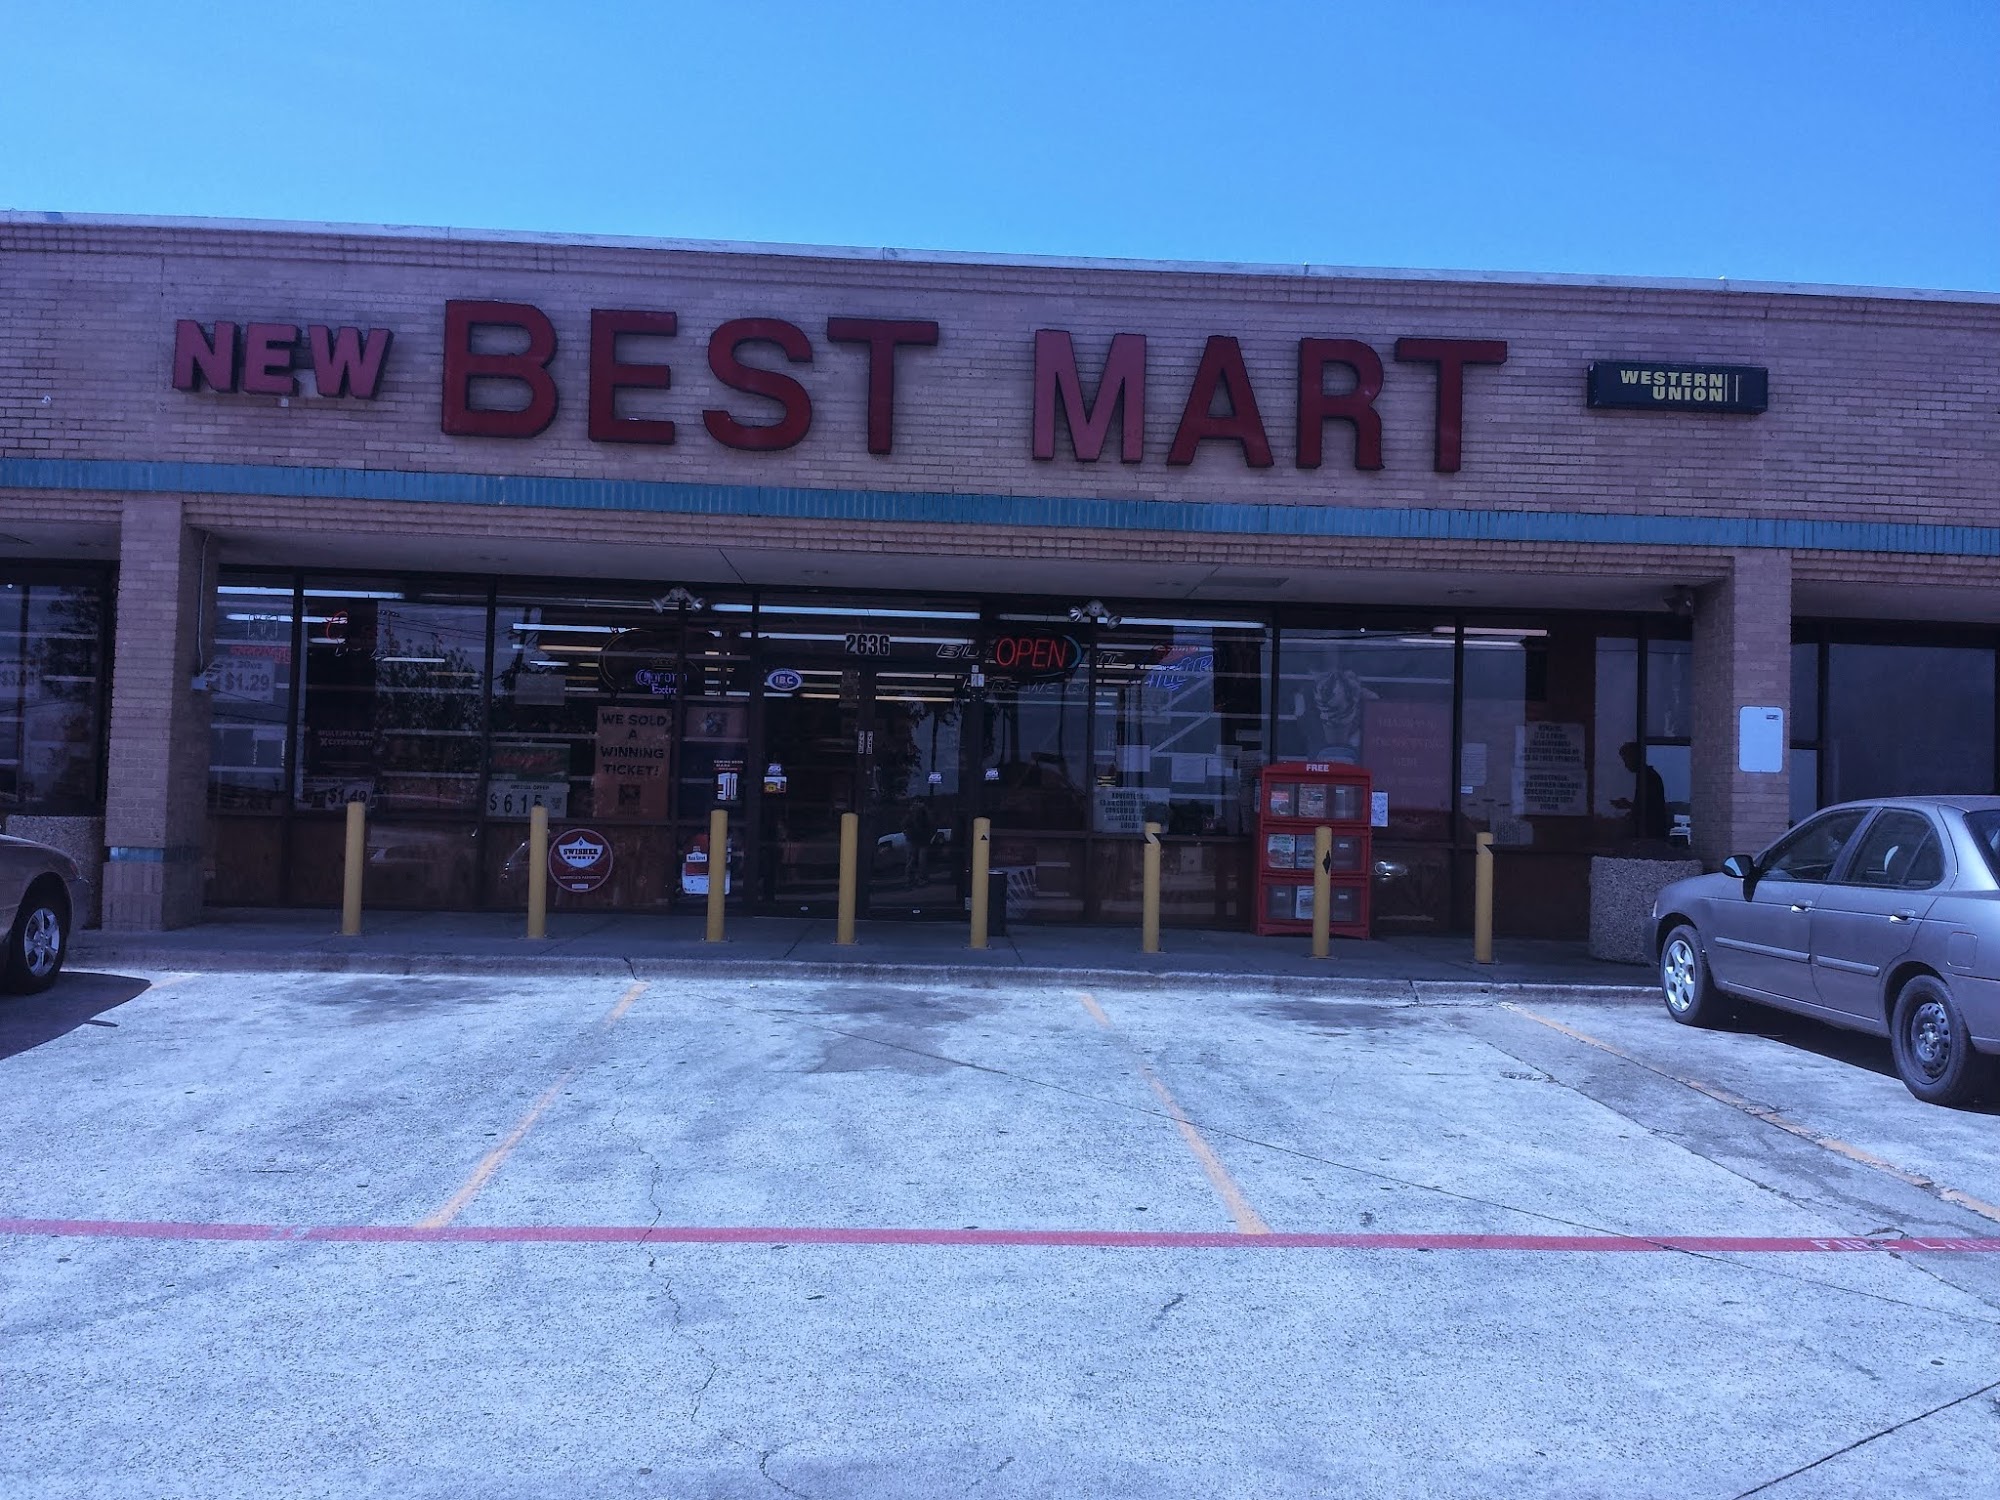 New Best Mart